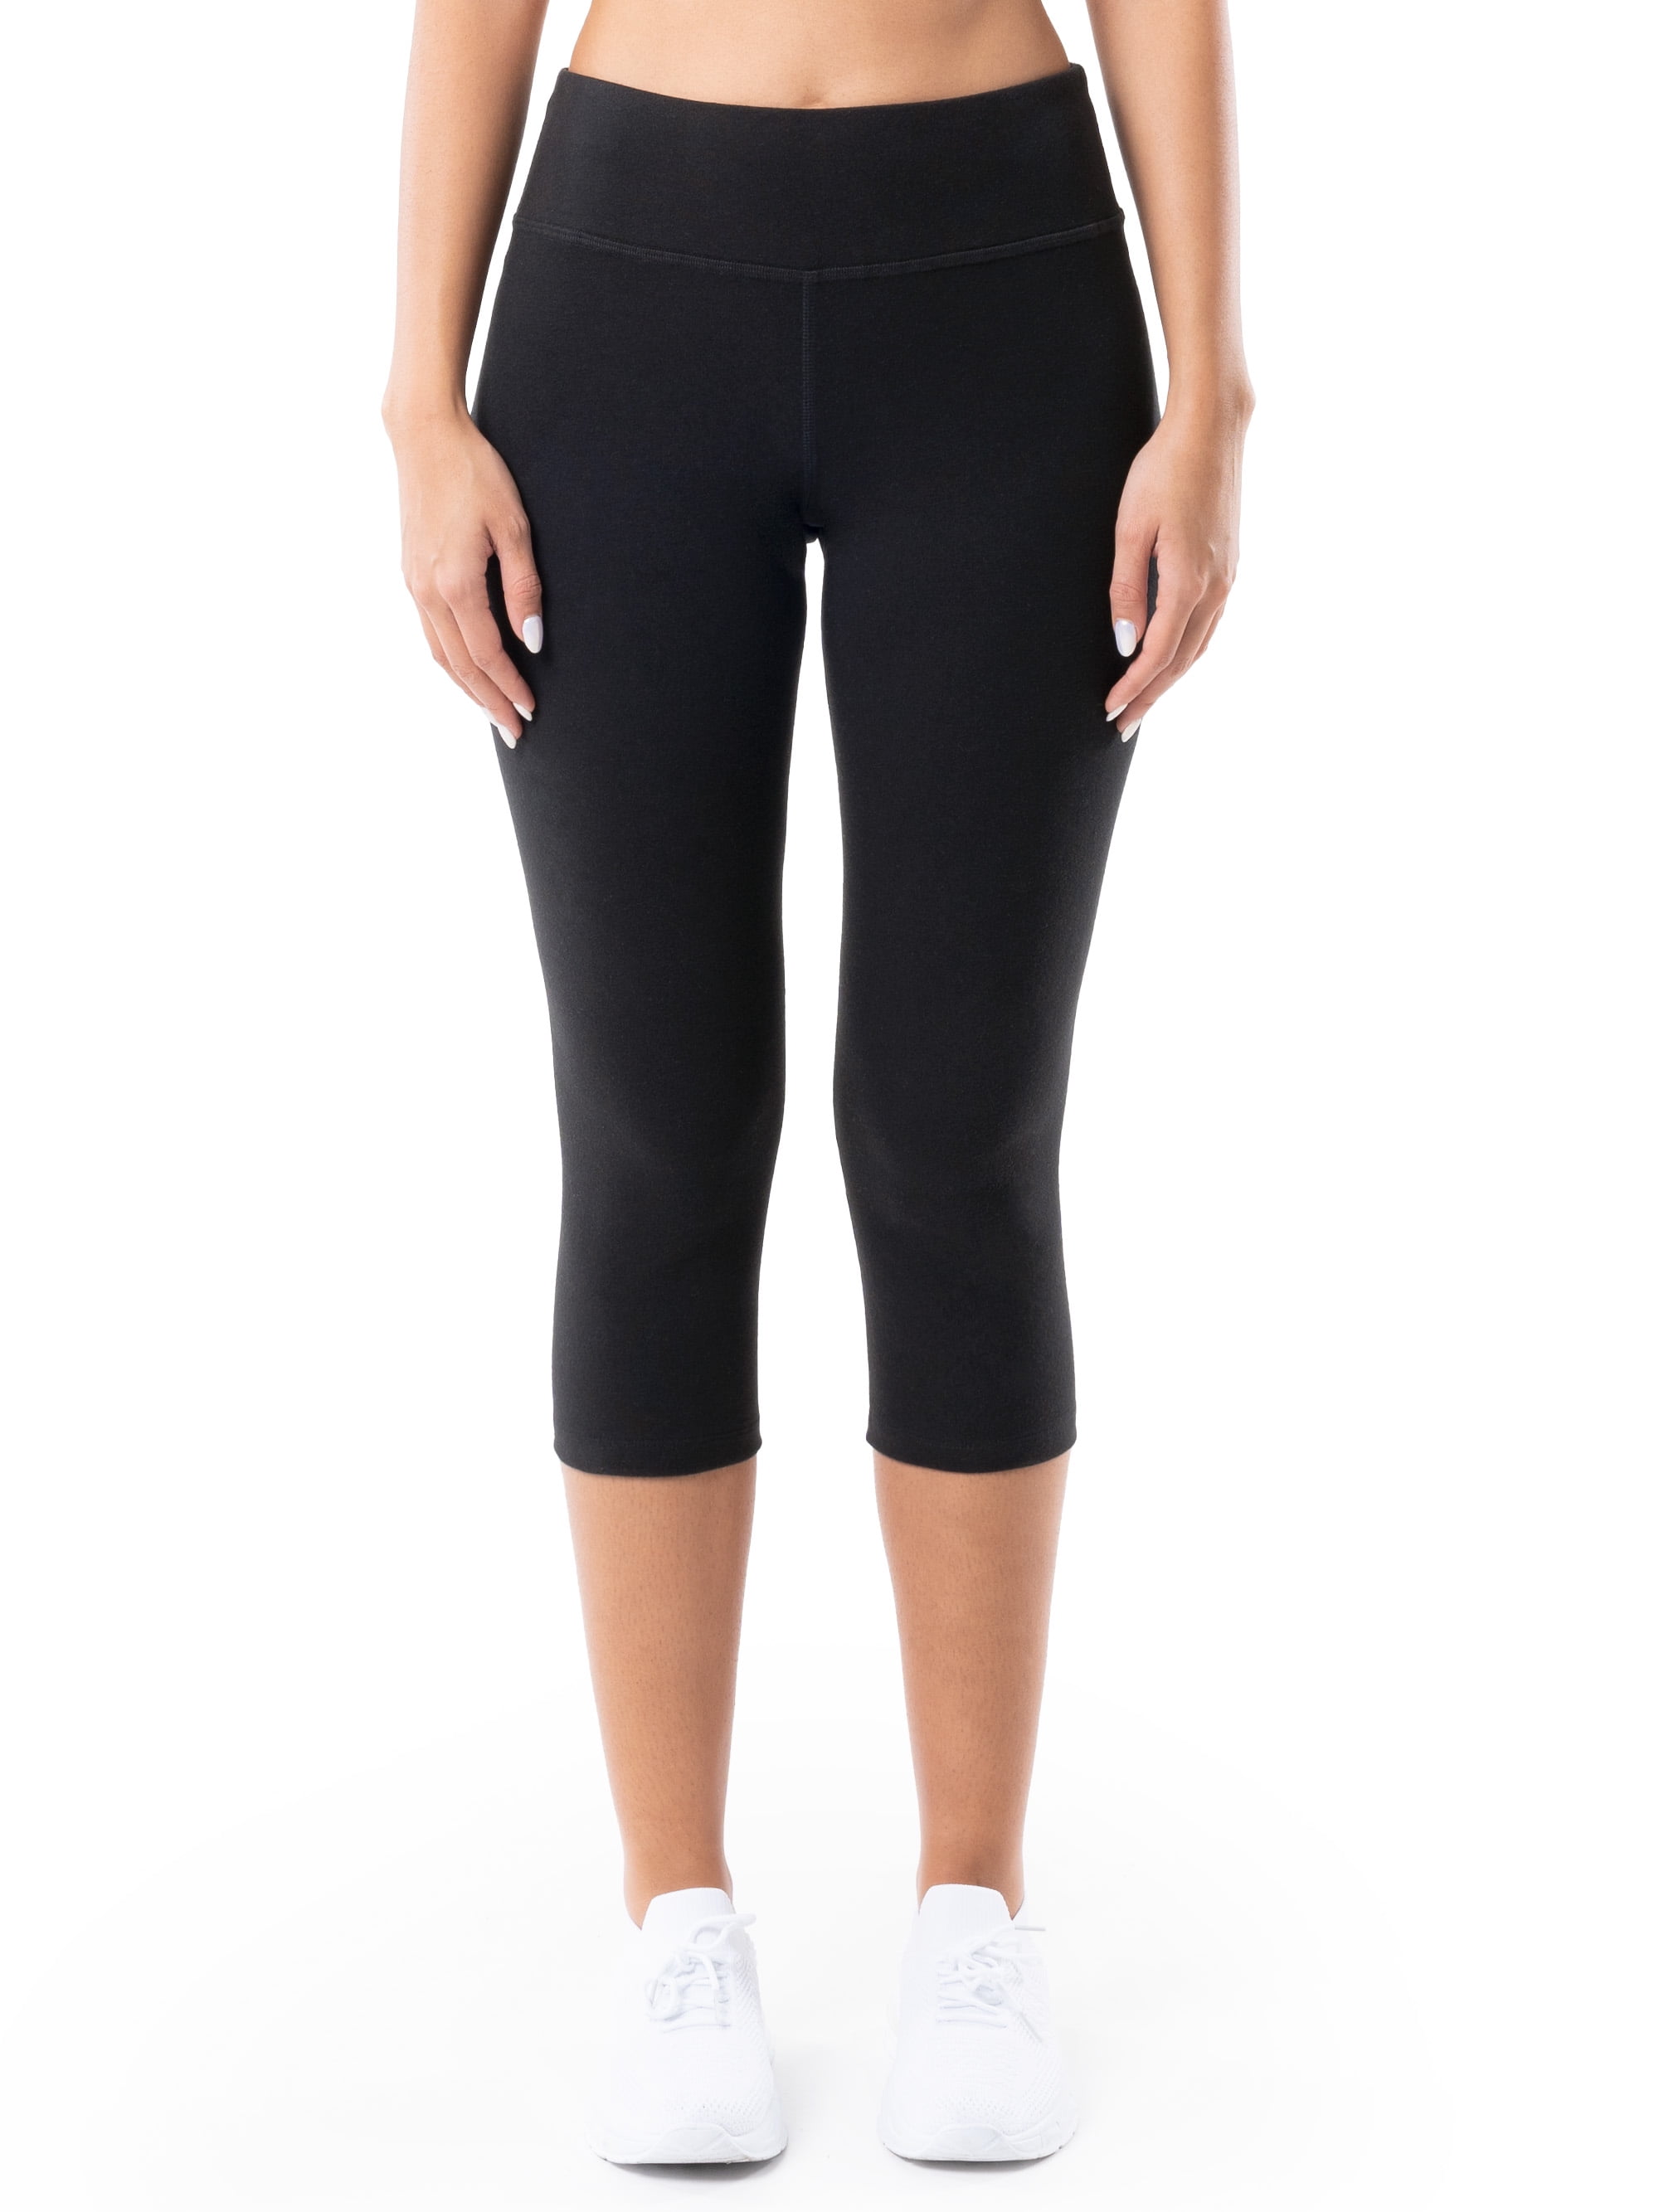 EttelLut Cotton Spandex Basic Capri Leggings Activewear Casual for Women  Black S 